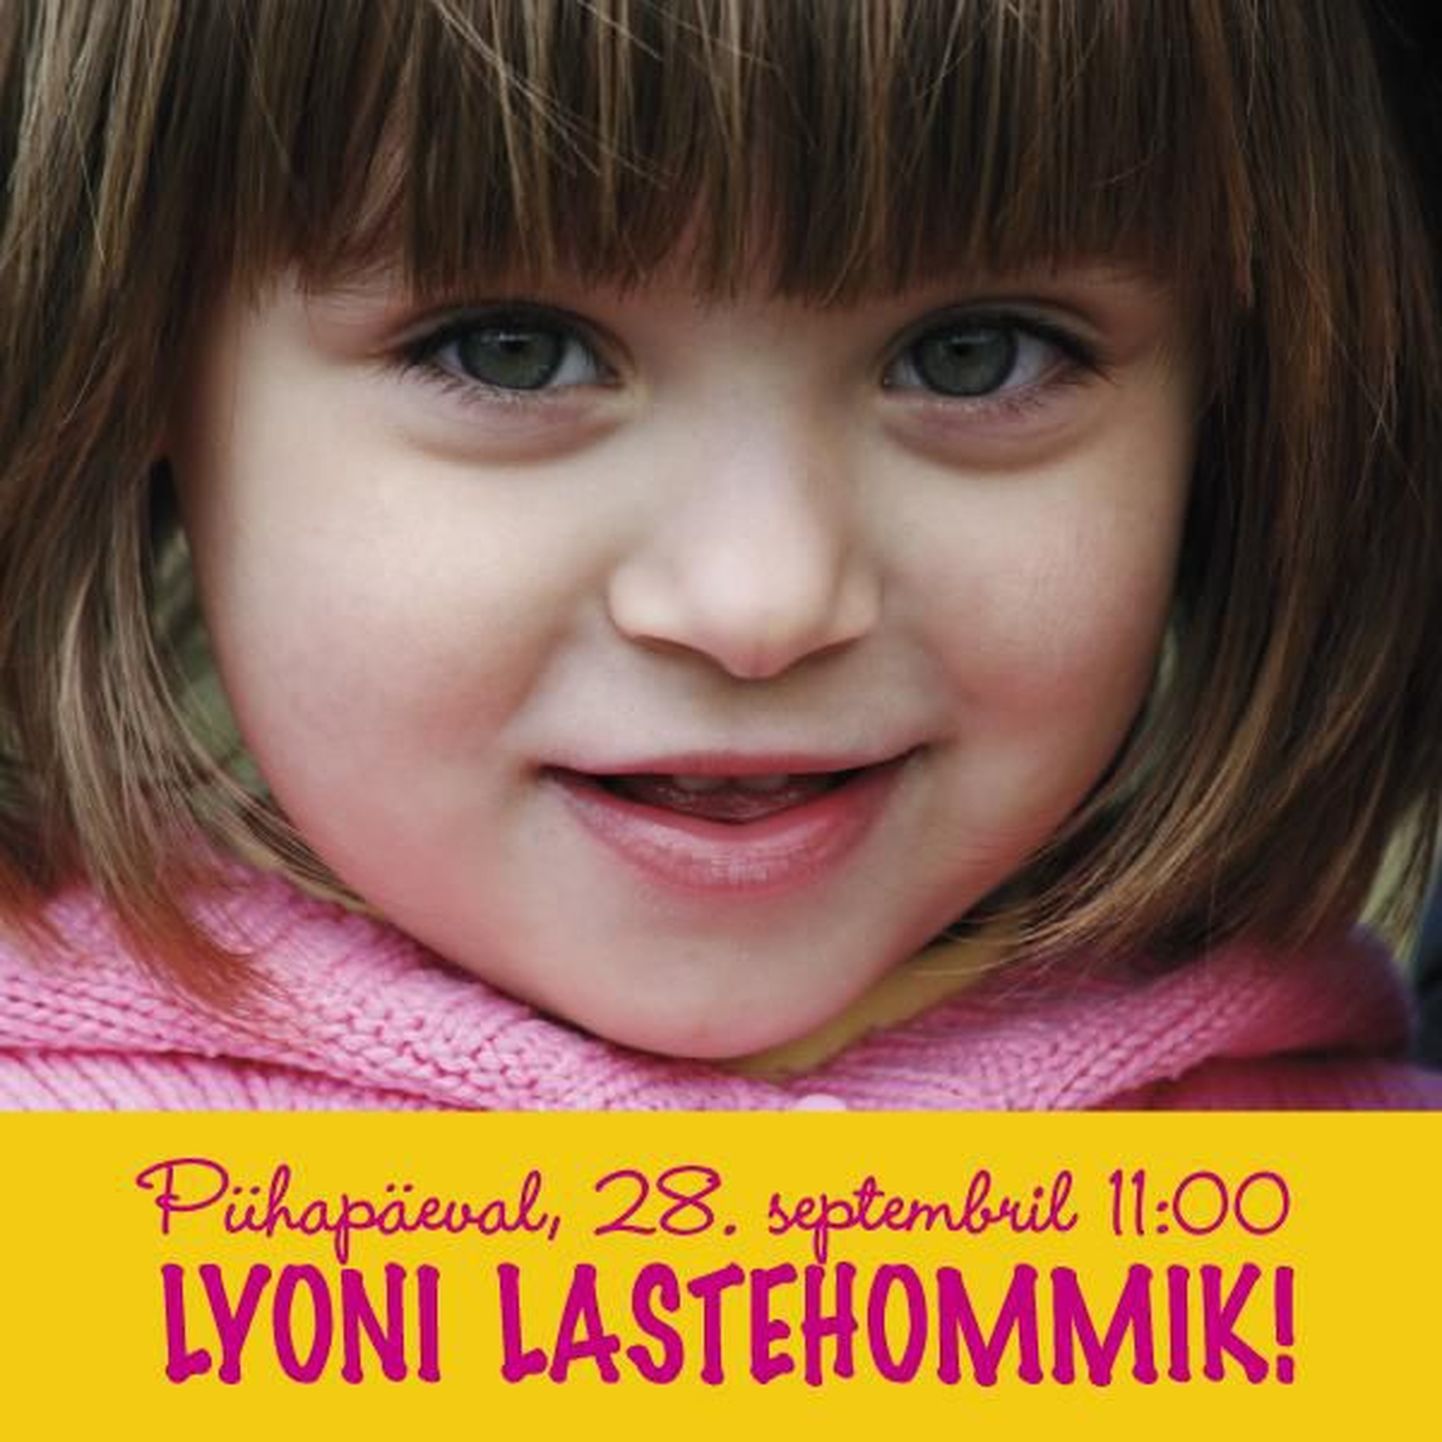 Lyoni lastehommik 28. septembril 11.00